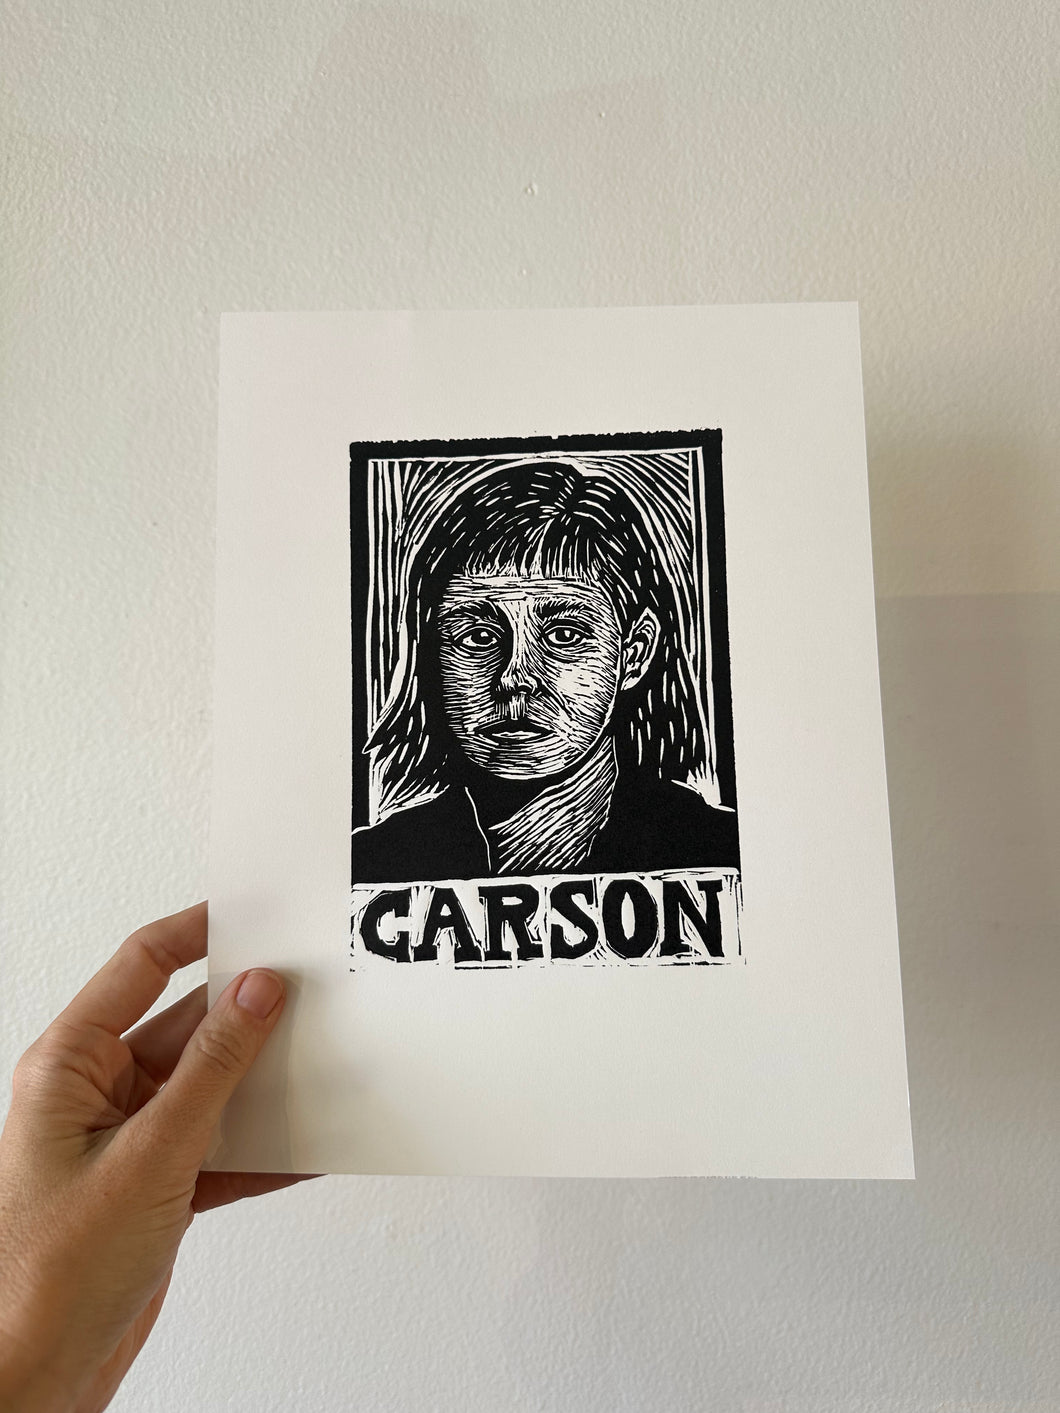 Carson McCuller Linocut Print Artist Proof